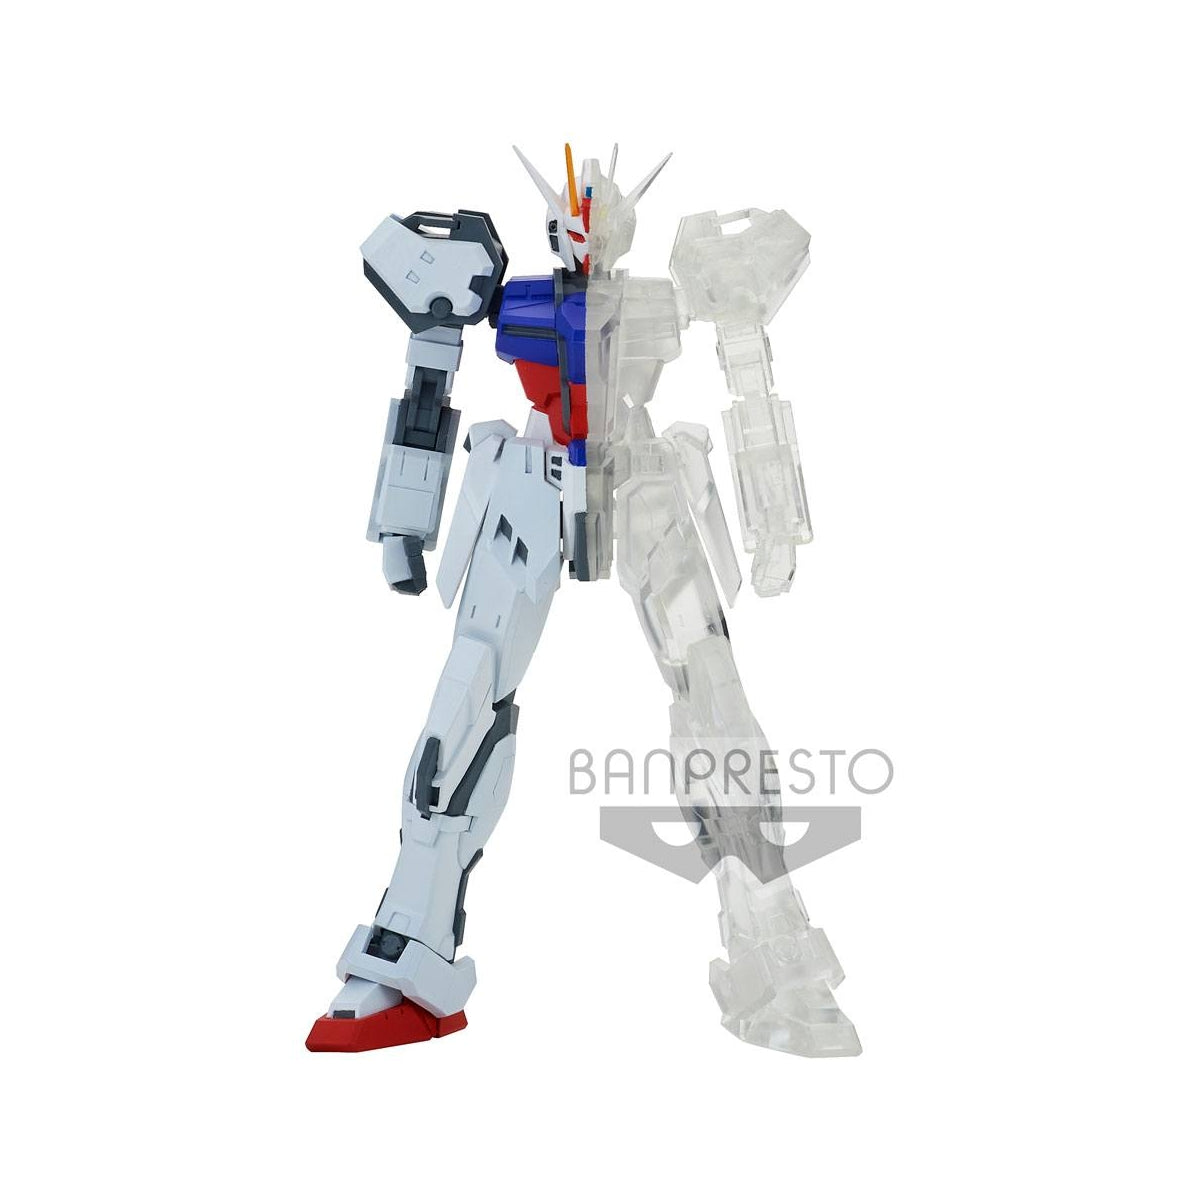 Banpresto: Mobil Suit Gundam - GAT X105 Strike Gundam Estructura Interna